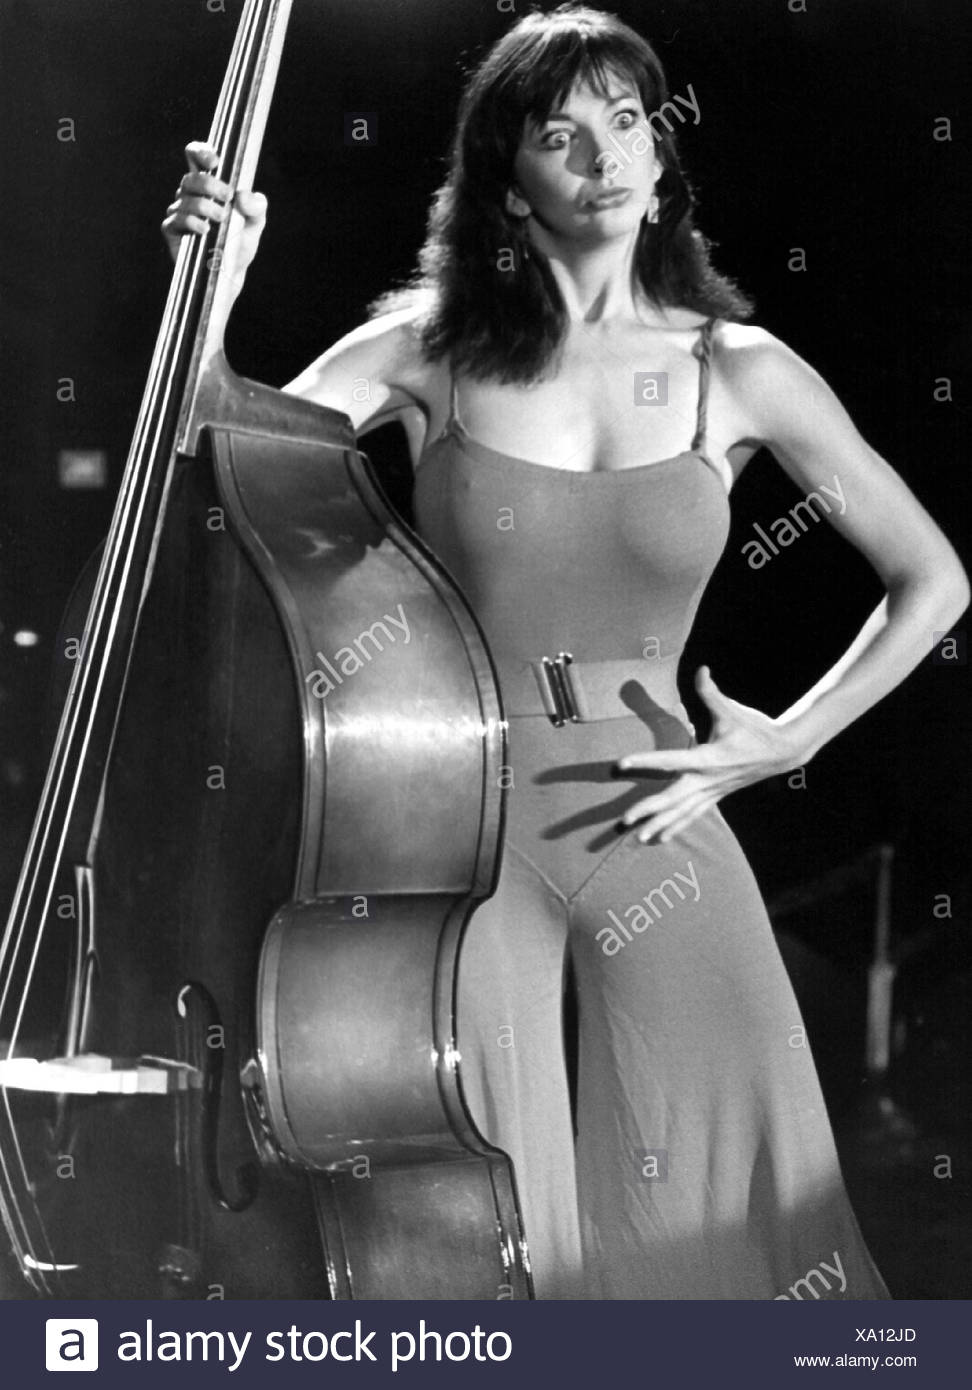 Bush, Kate, * 30.7.1958, British musician, half length, during a show. 